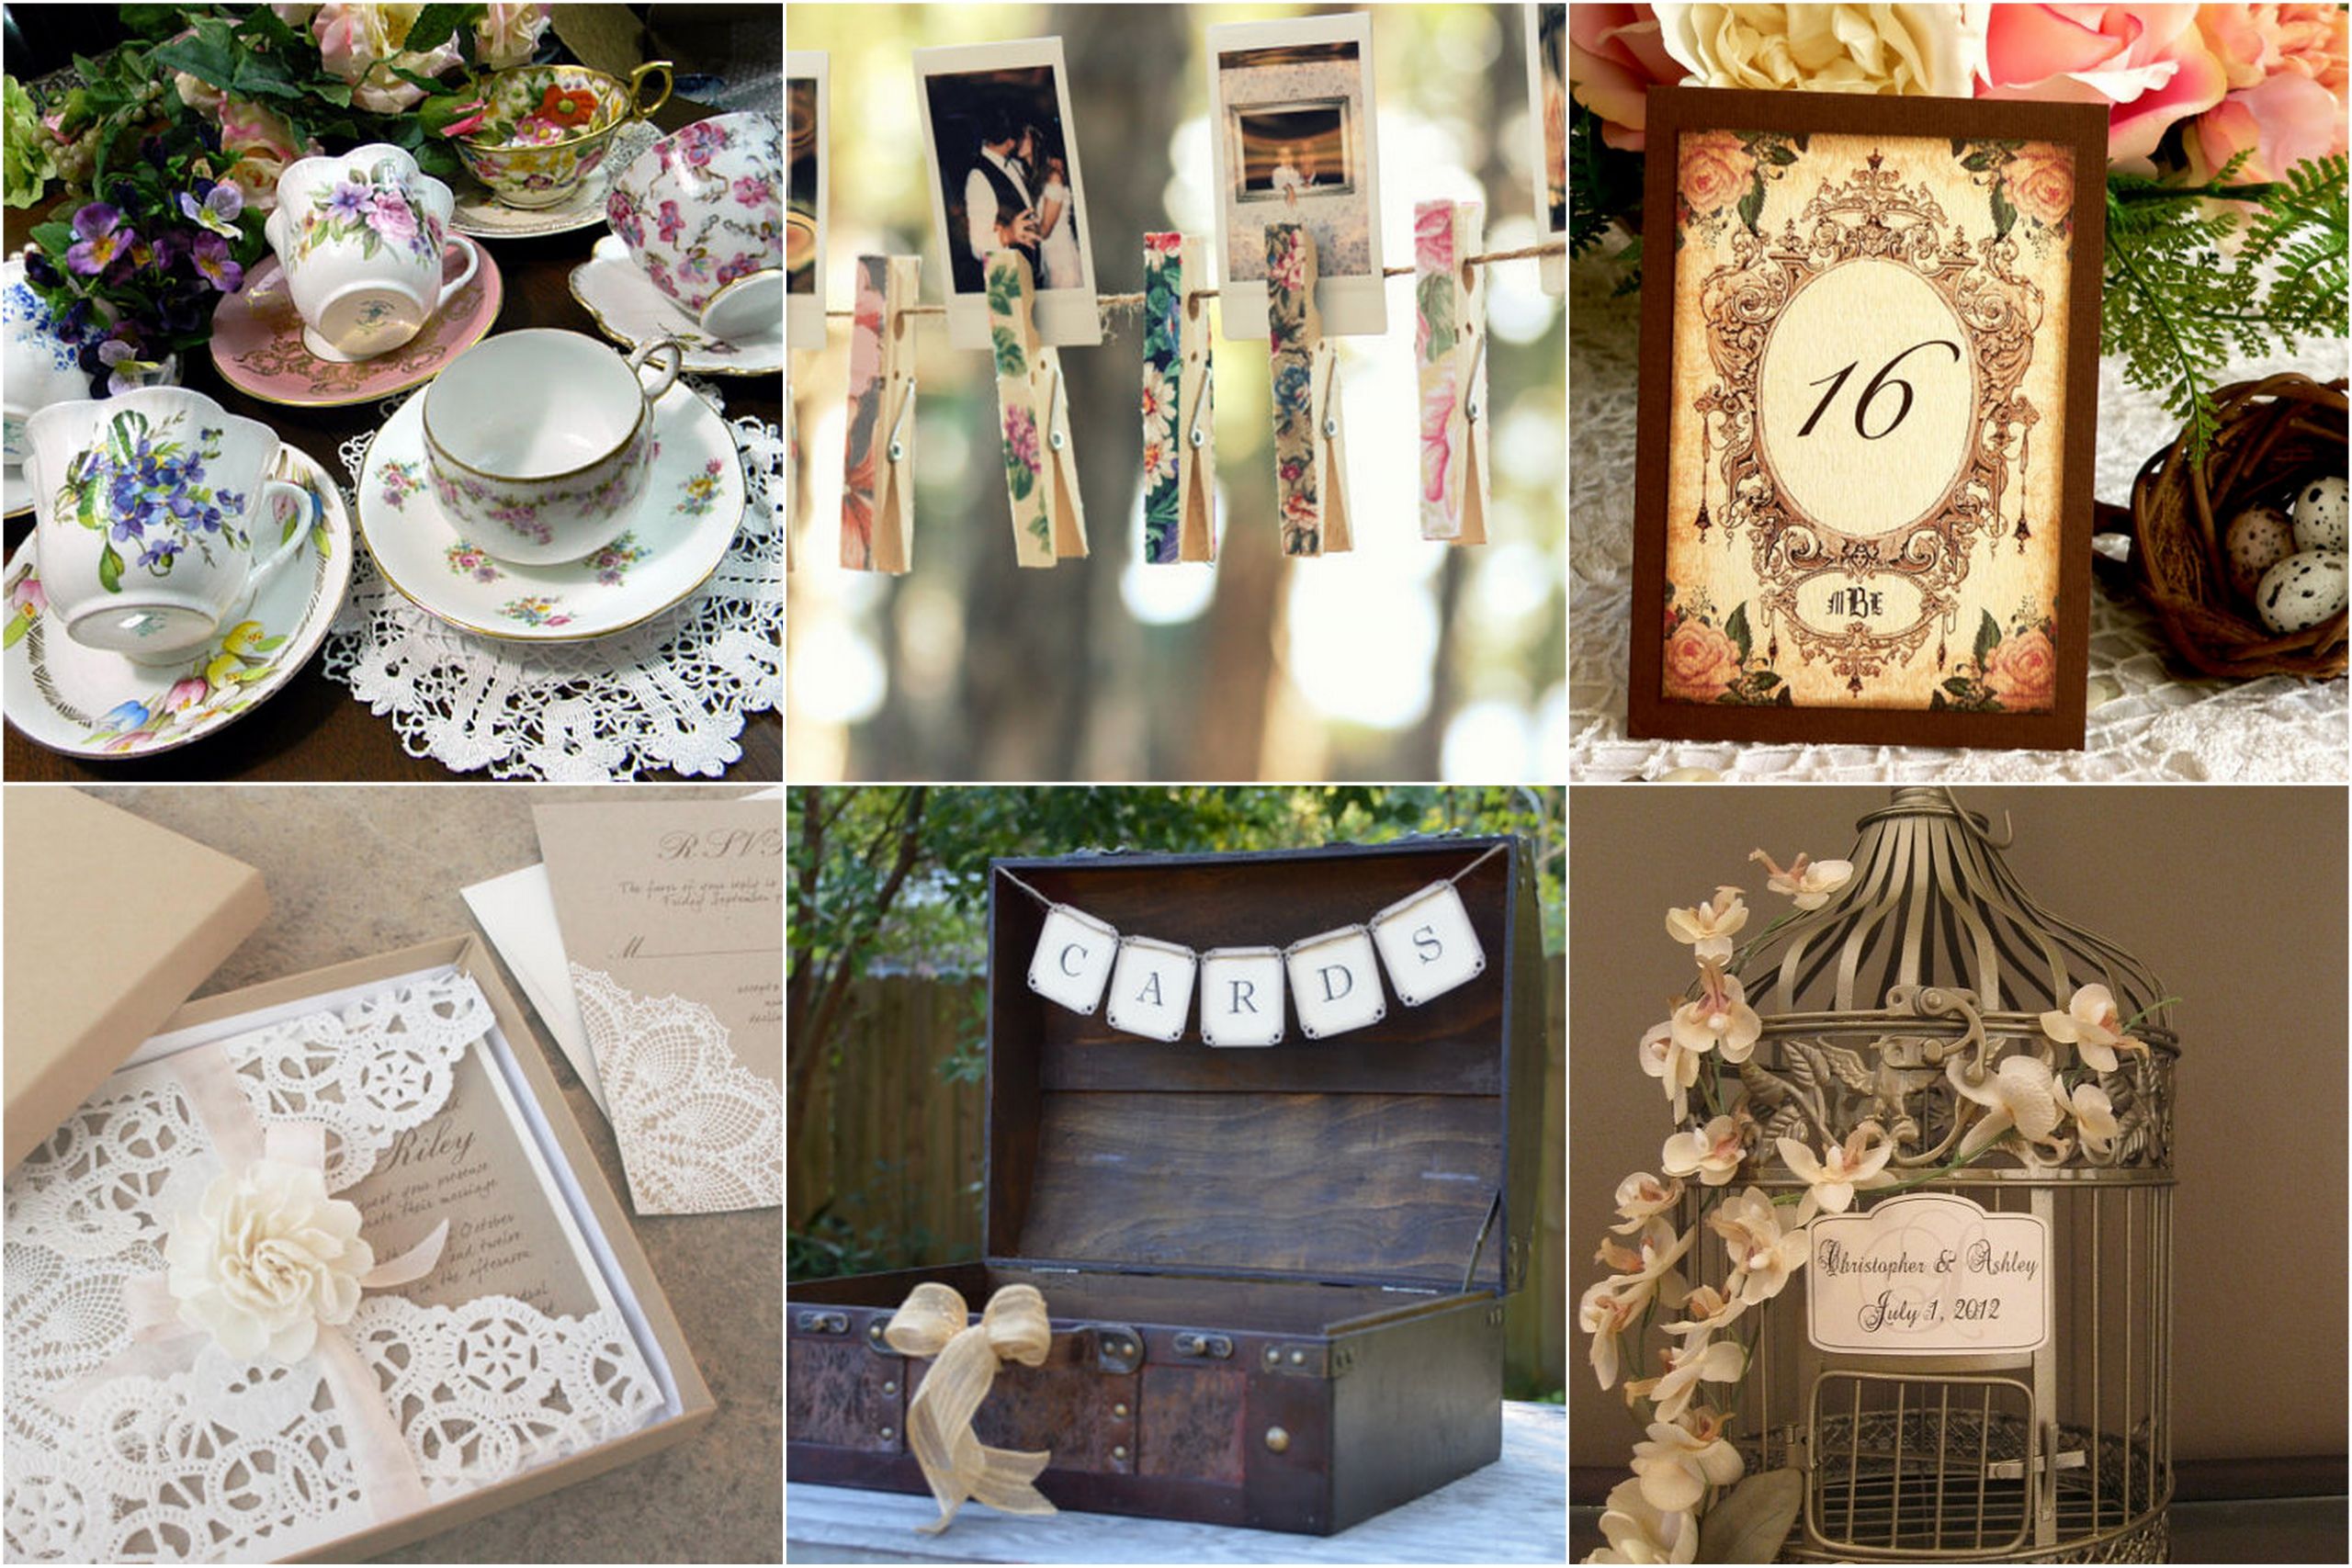 A List Of Wedding Themes
 10 Great Destination Wedding Themes